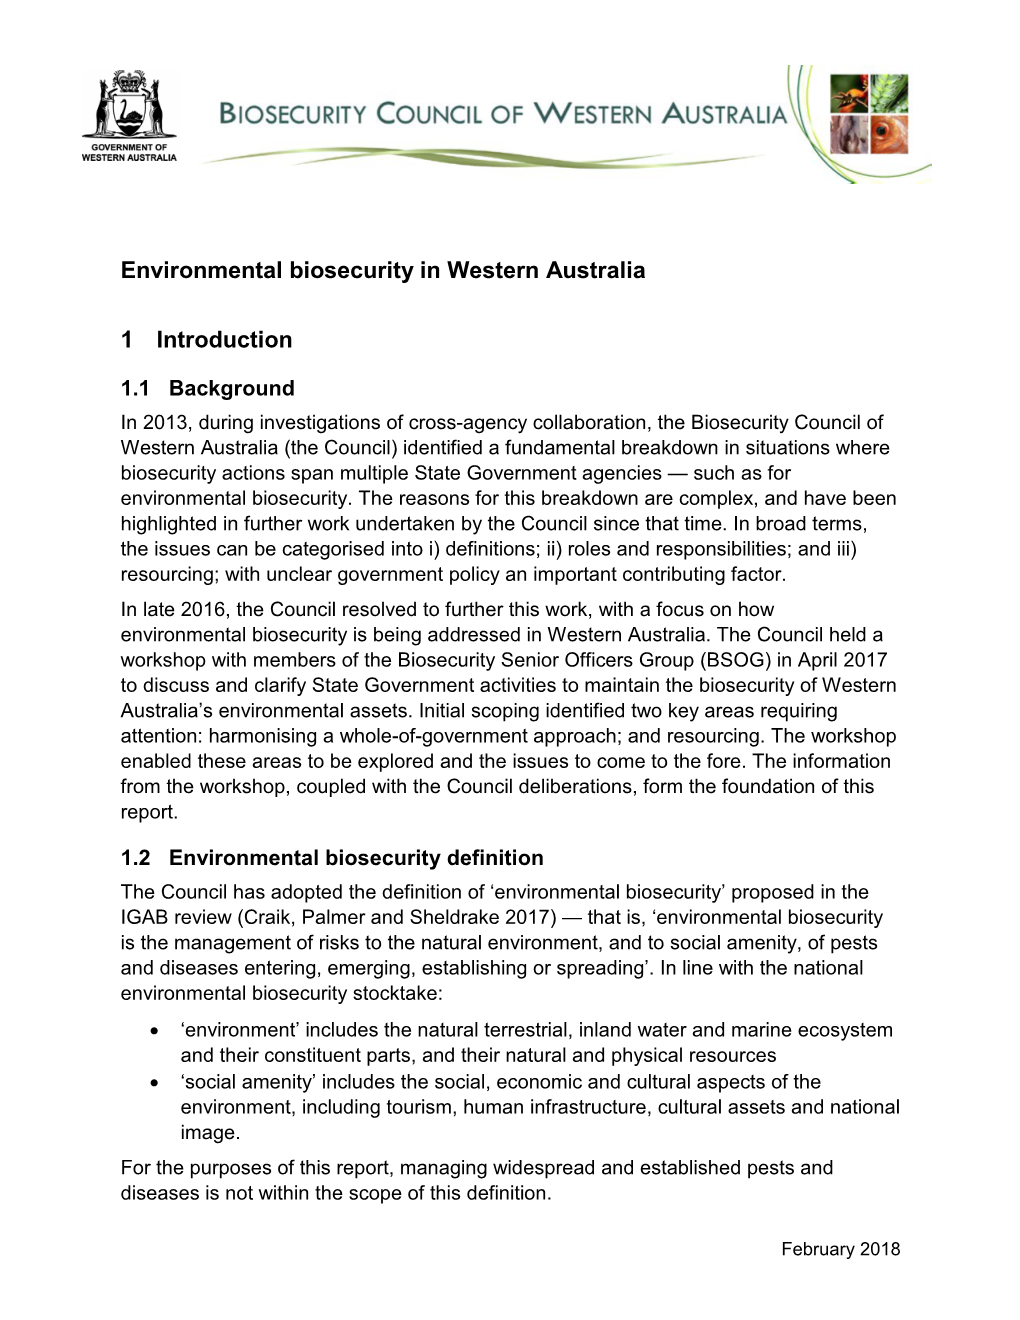 Environmental Biosecurity in Western Australia